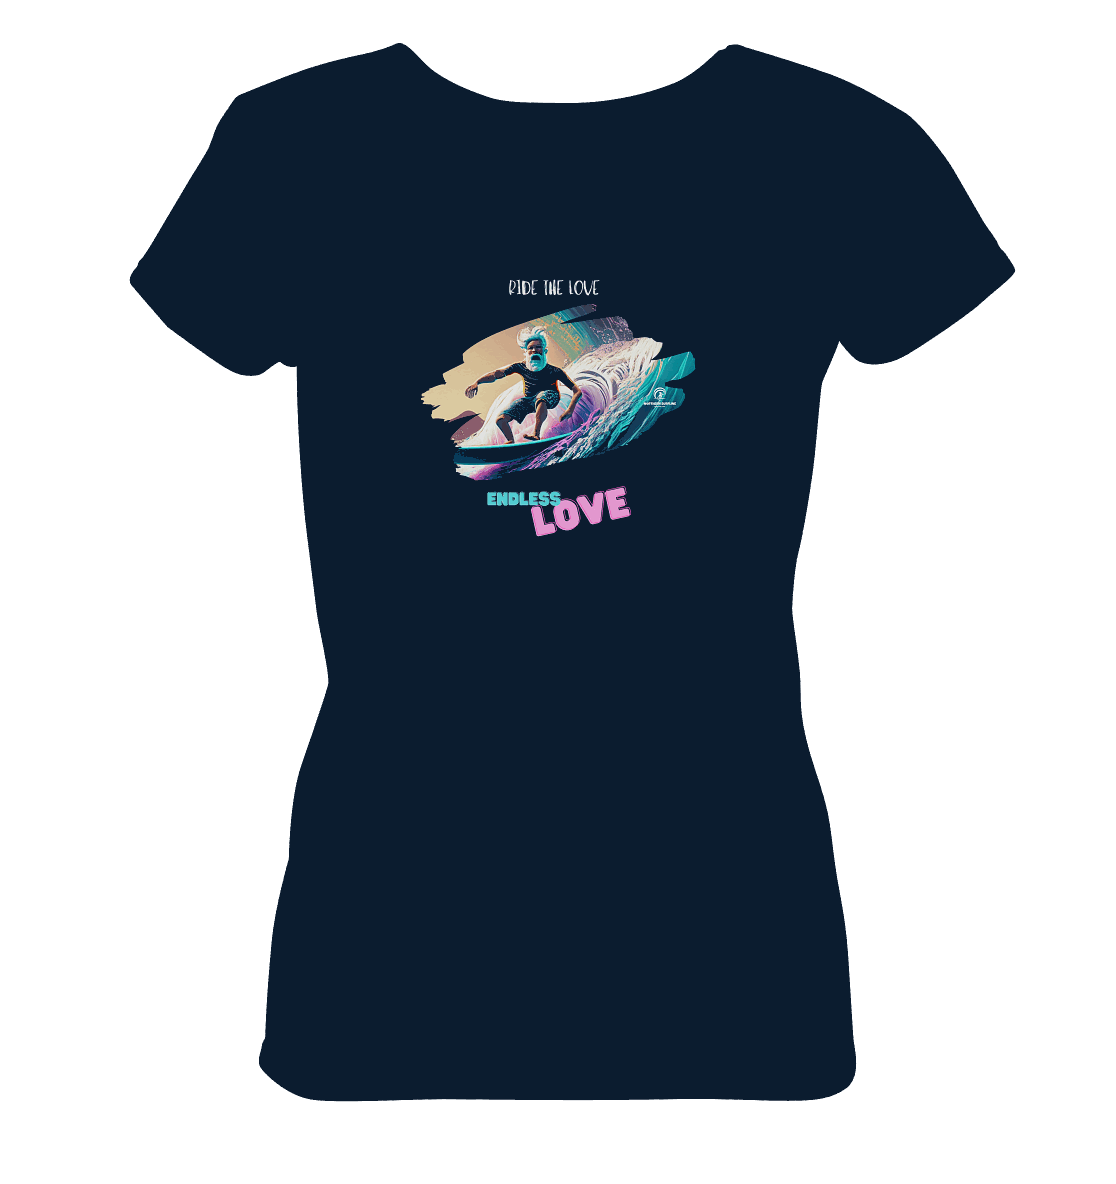 Northern Sufline - Ladies Organic Shirt